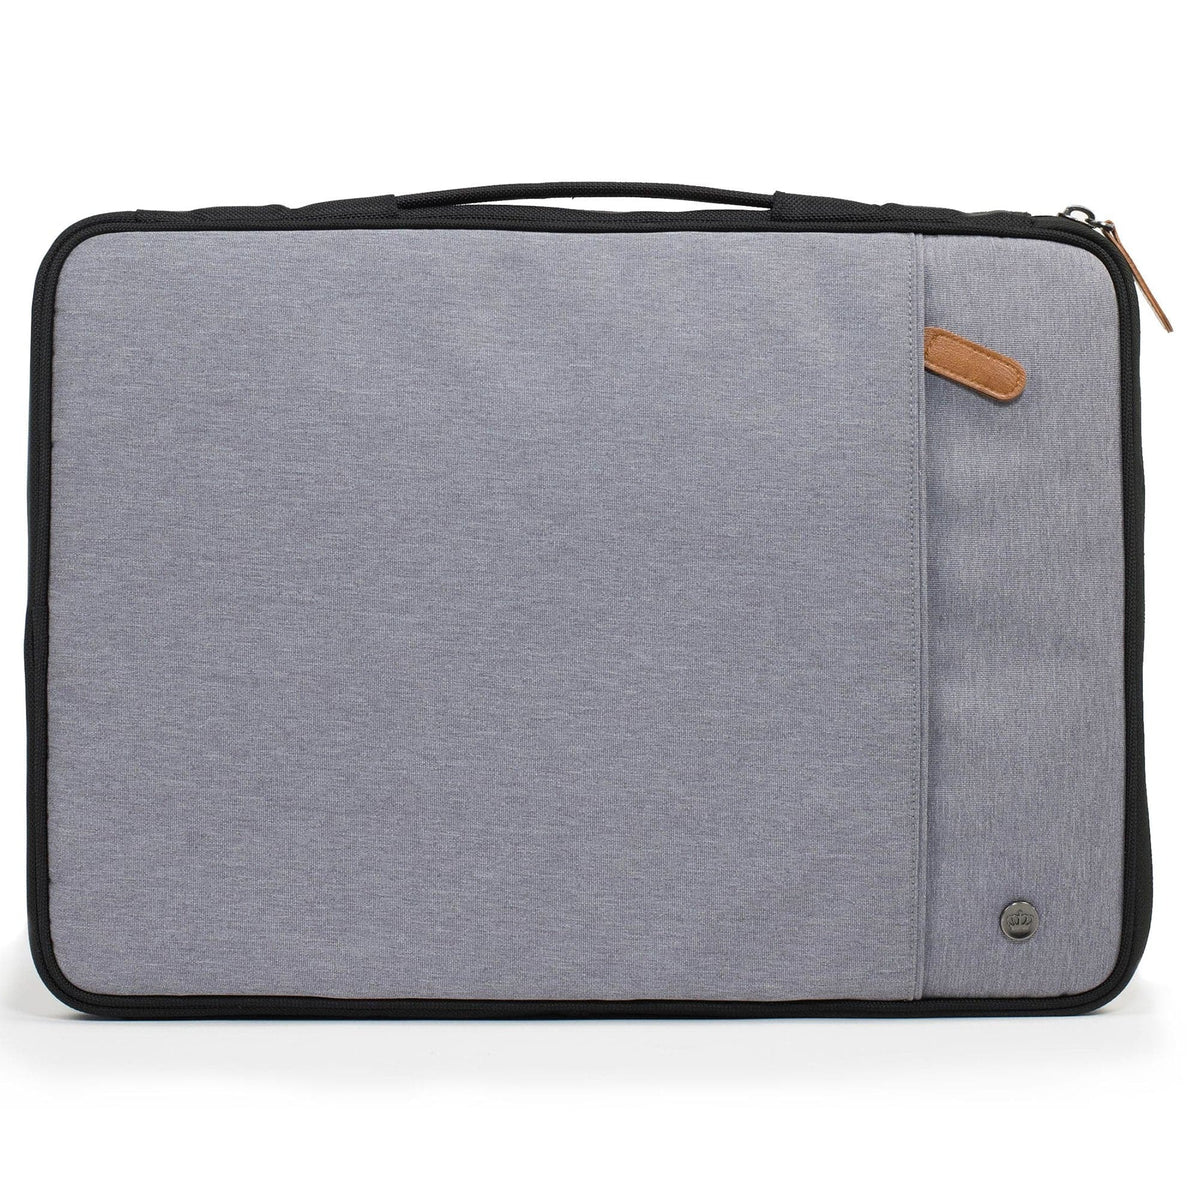 PKG Stuff 15"-16" Laptop Sleeve Bag